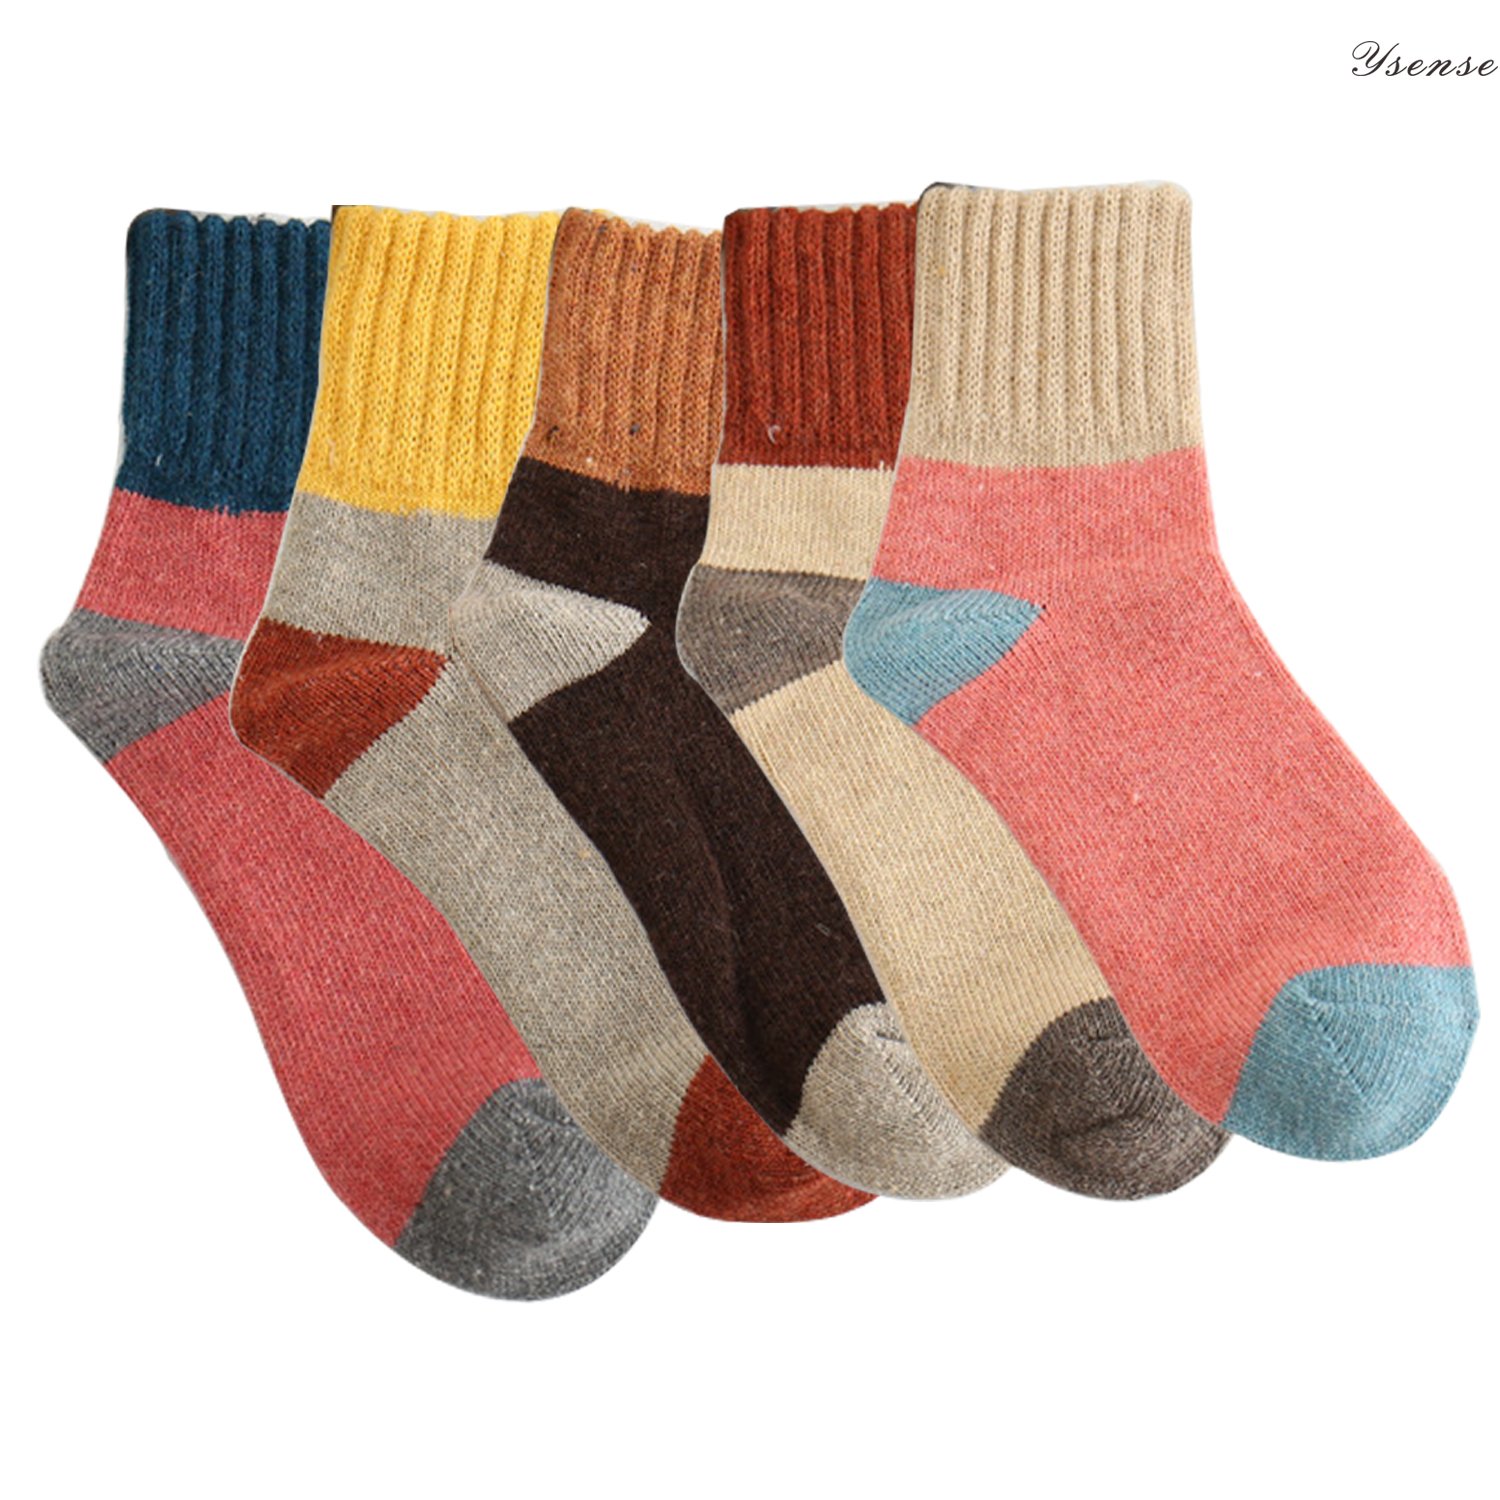 One Size 5 Pack Winter Wool Socks for Women Knit Cotton Warm Crew Sock Fun Design